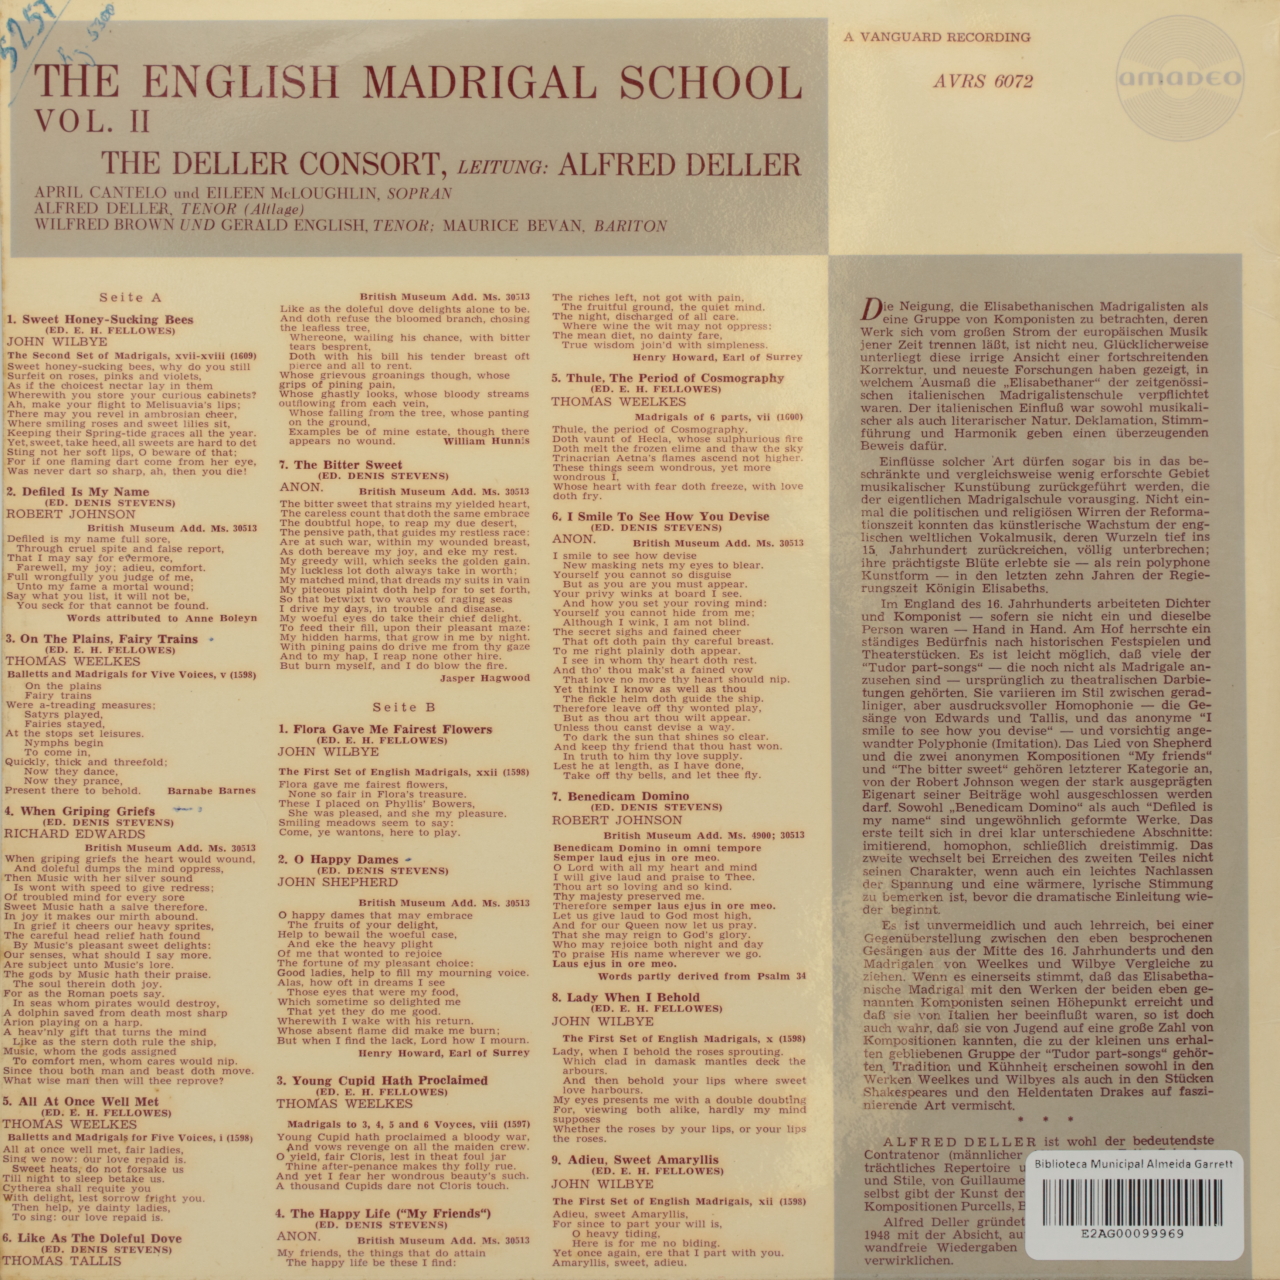 The English Madrigal School Vol. II